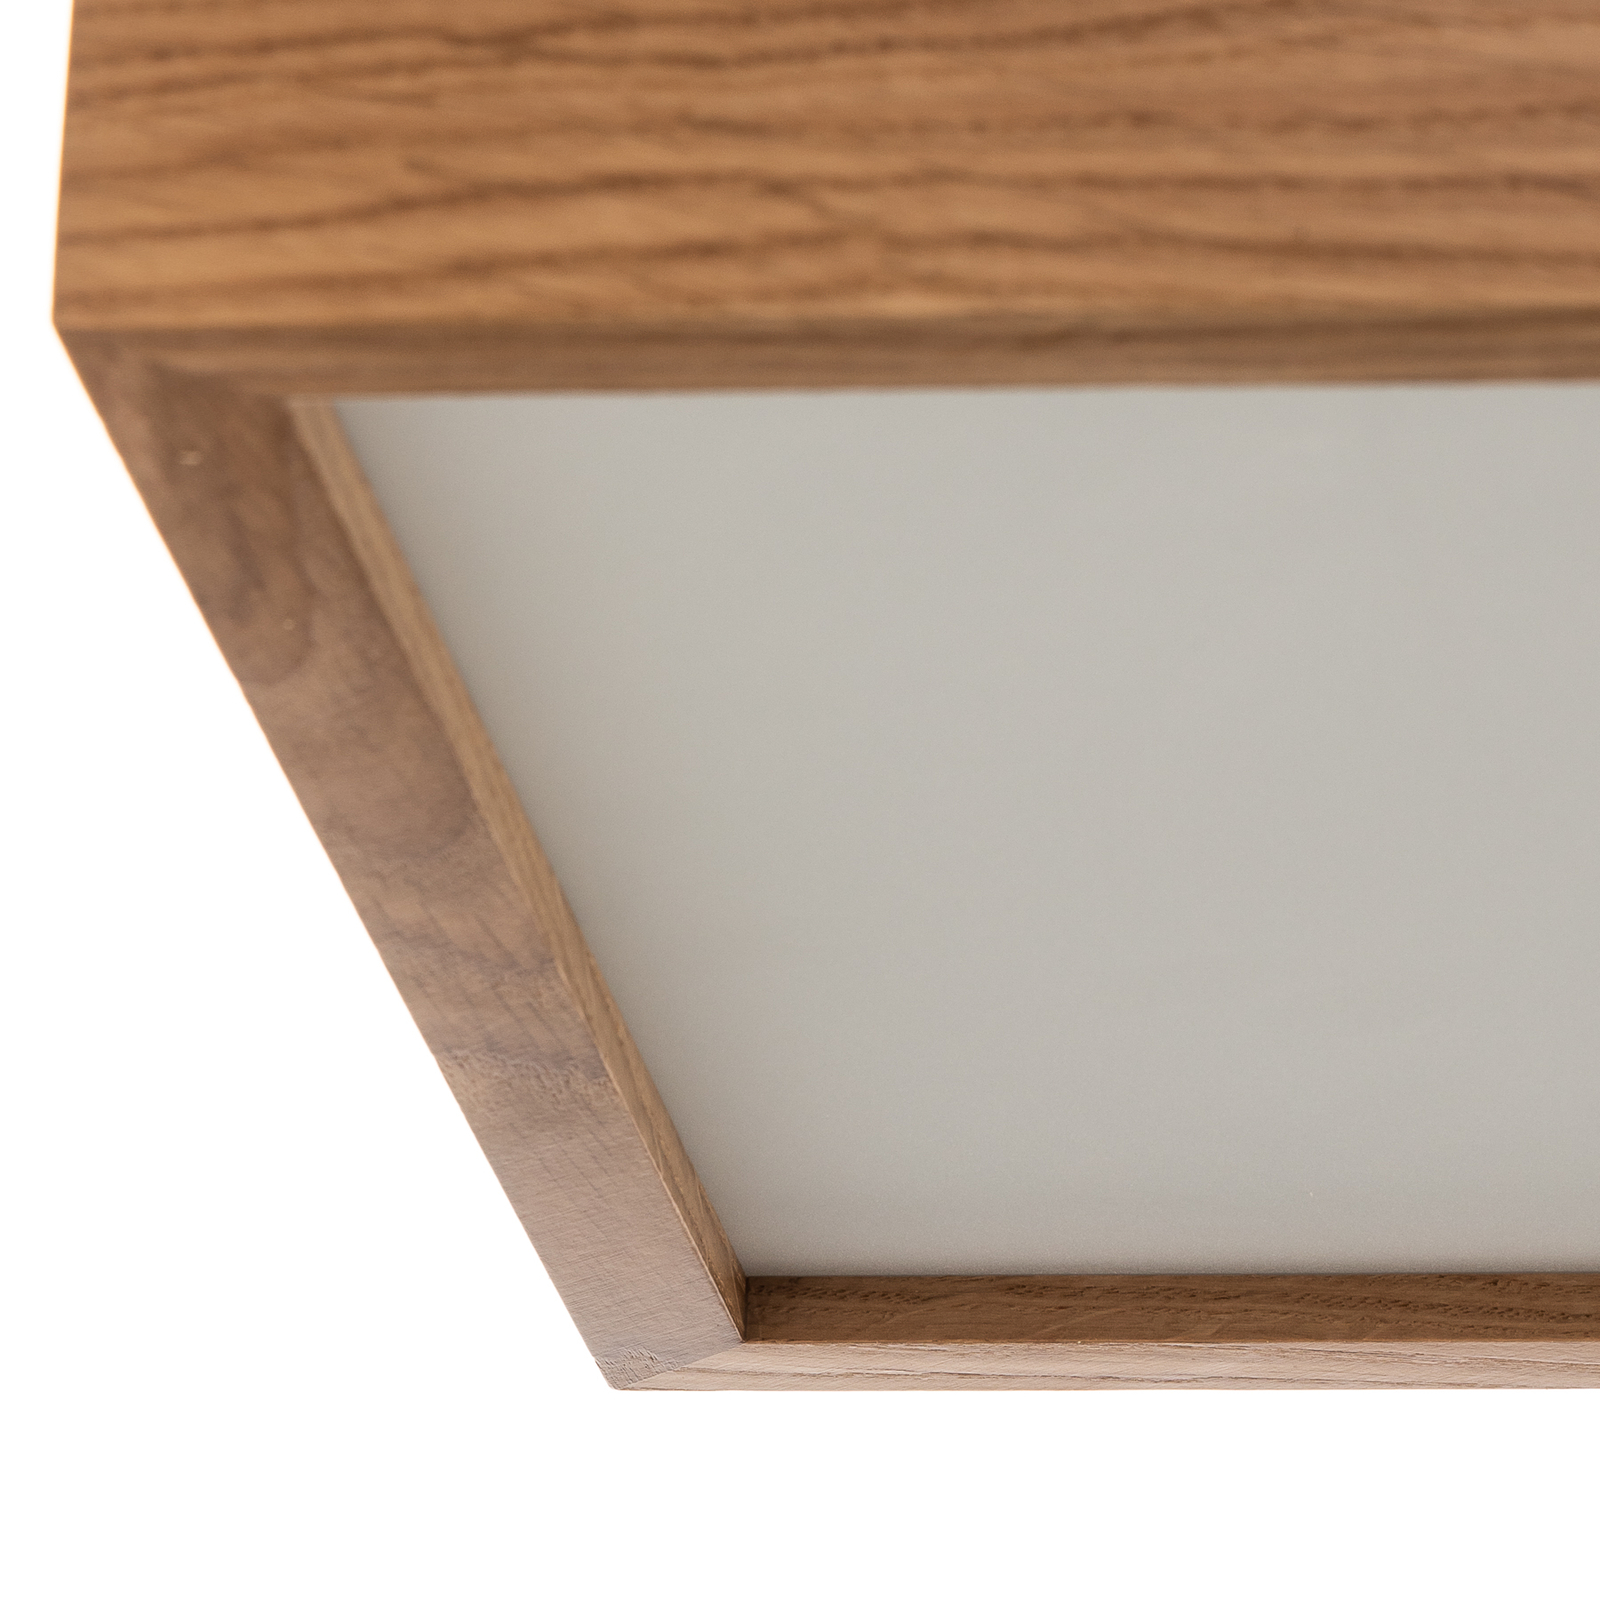 Quatro DR ceiling light with wooden frame, 30.5 cm